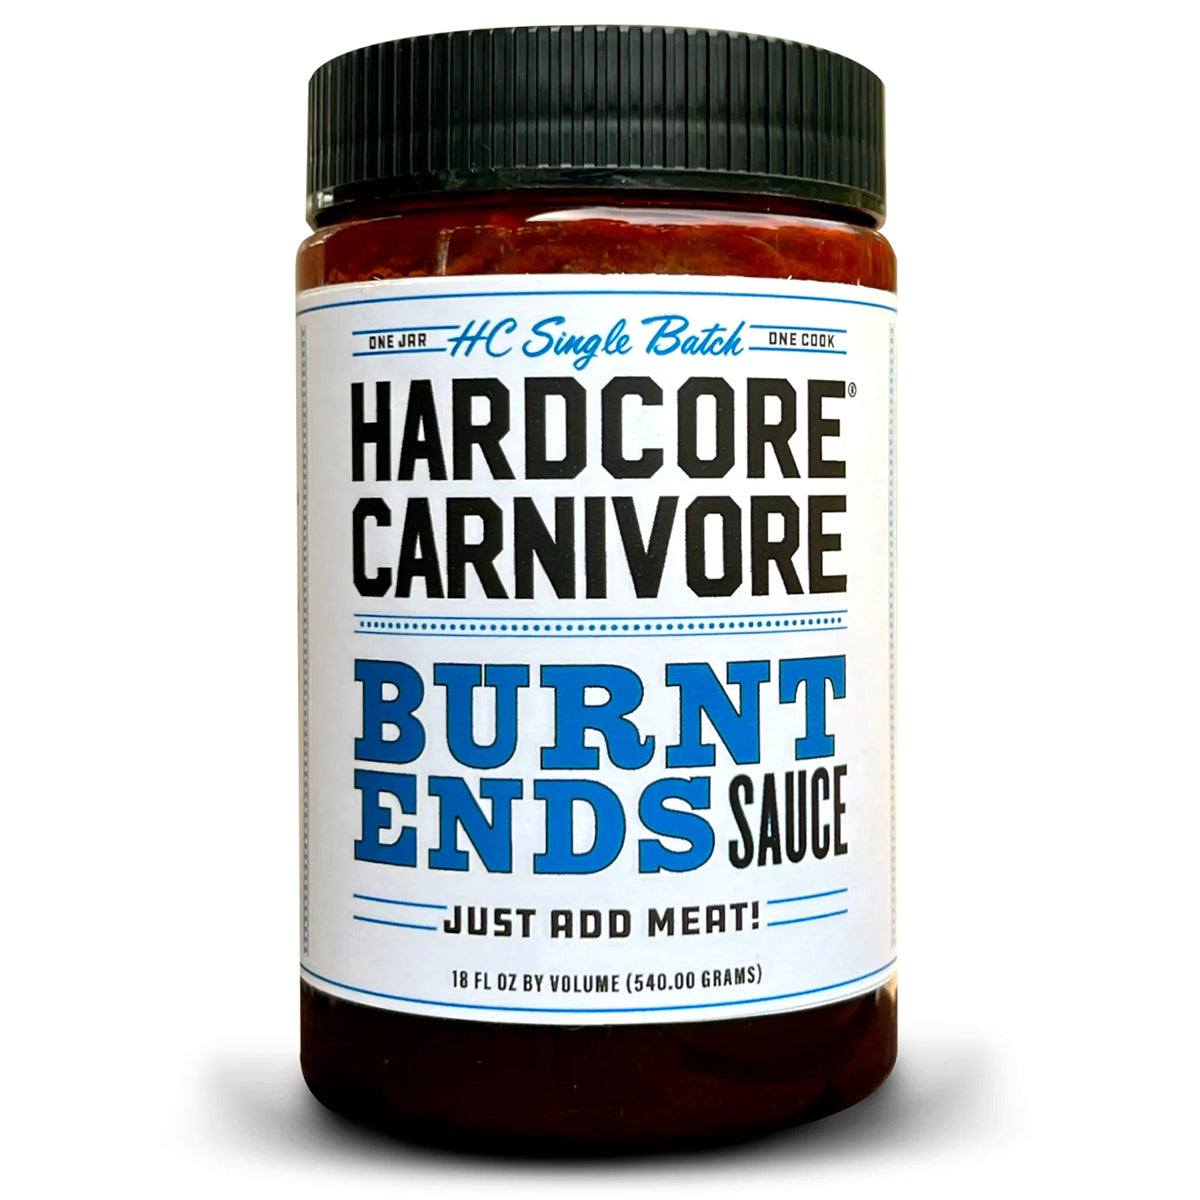 Hardcore Carnivore Burnt Ends Sauce (18oz)